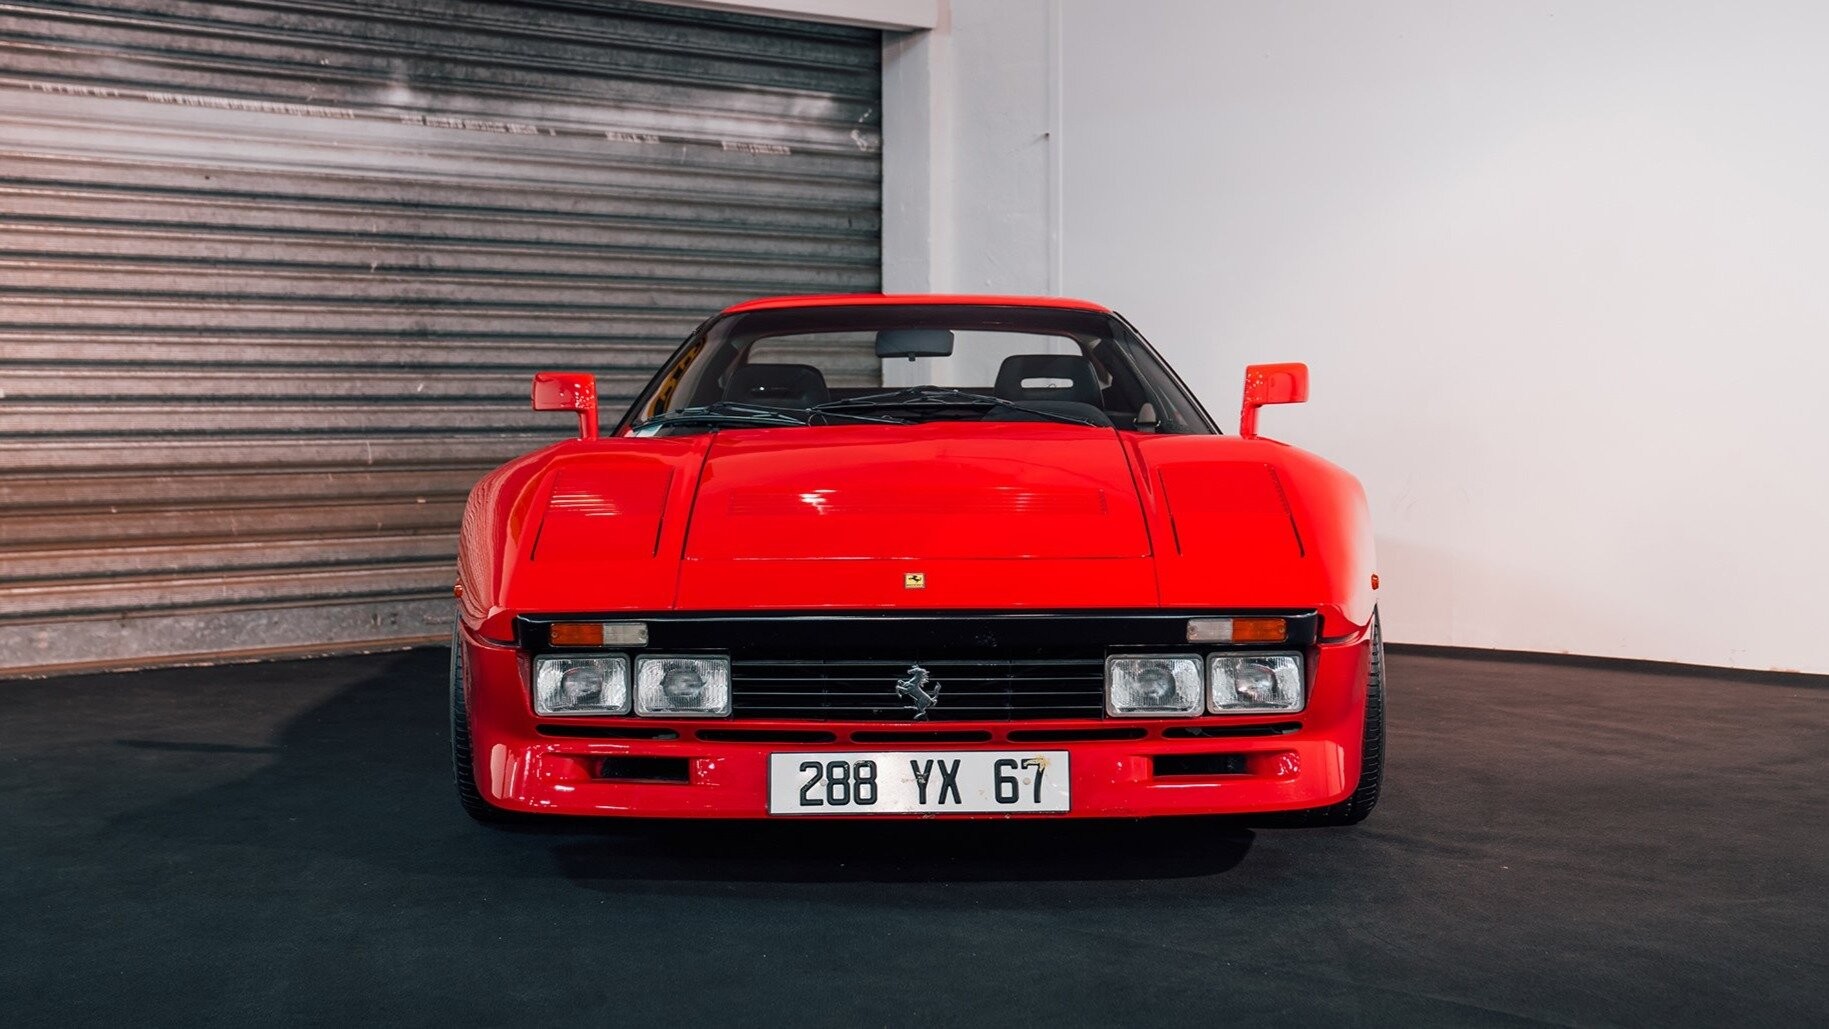 Ferrari 288 GTO из коллекции французского гонщика продали